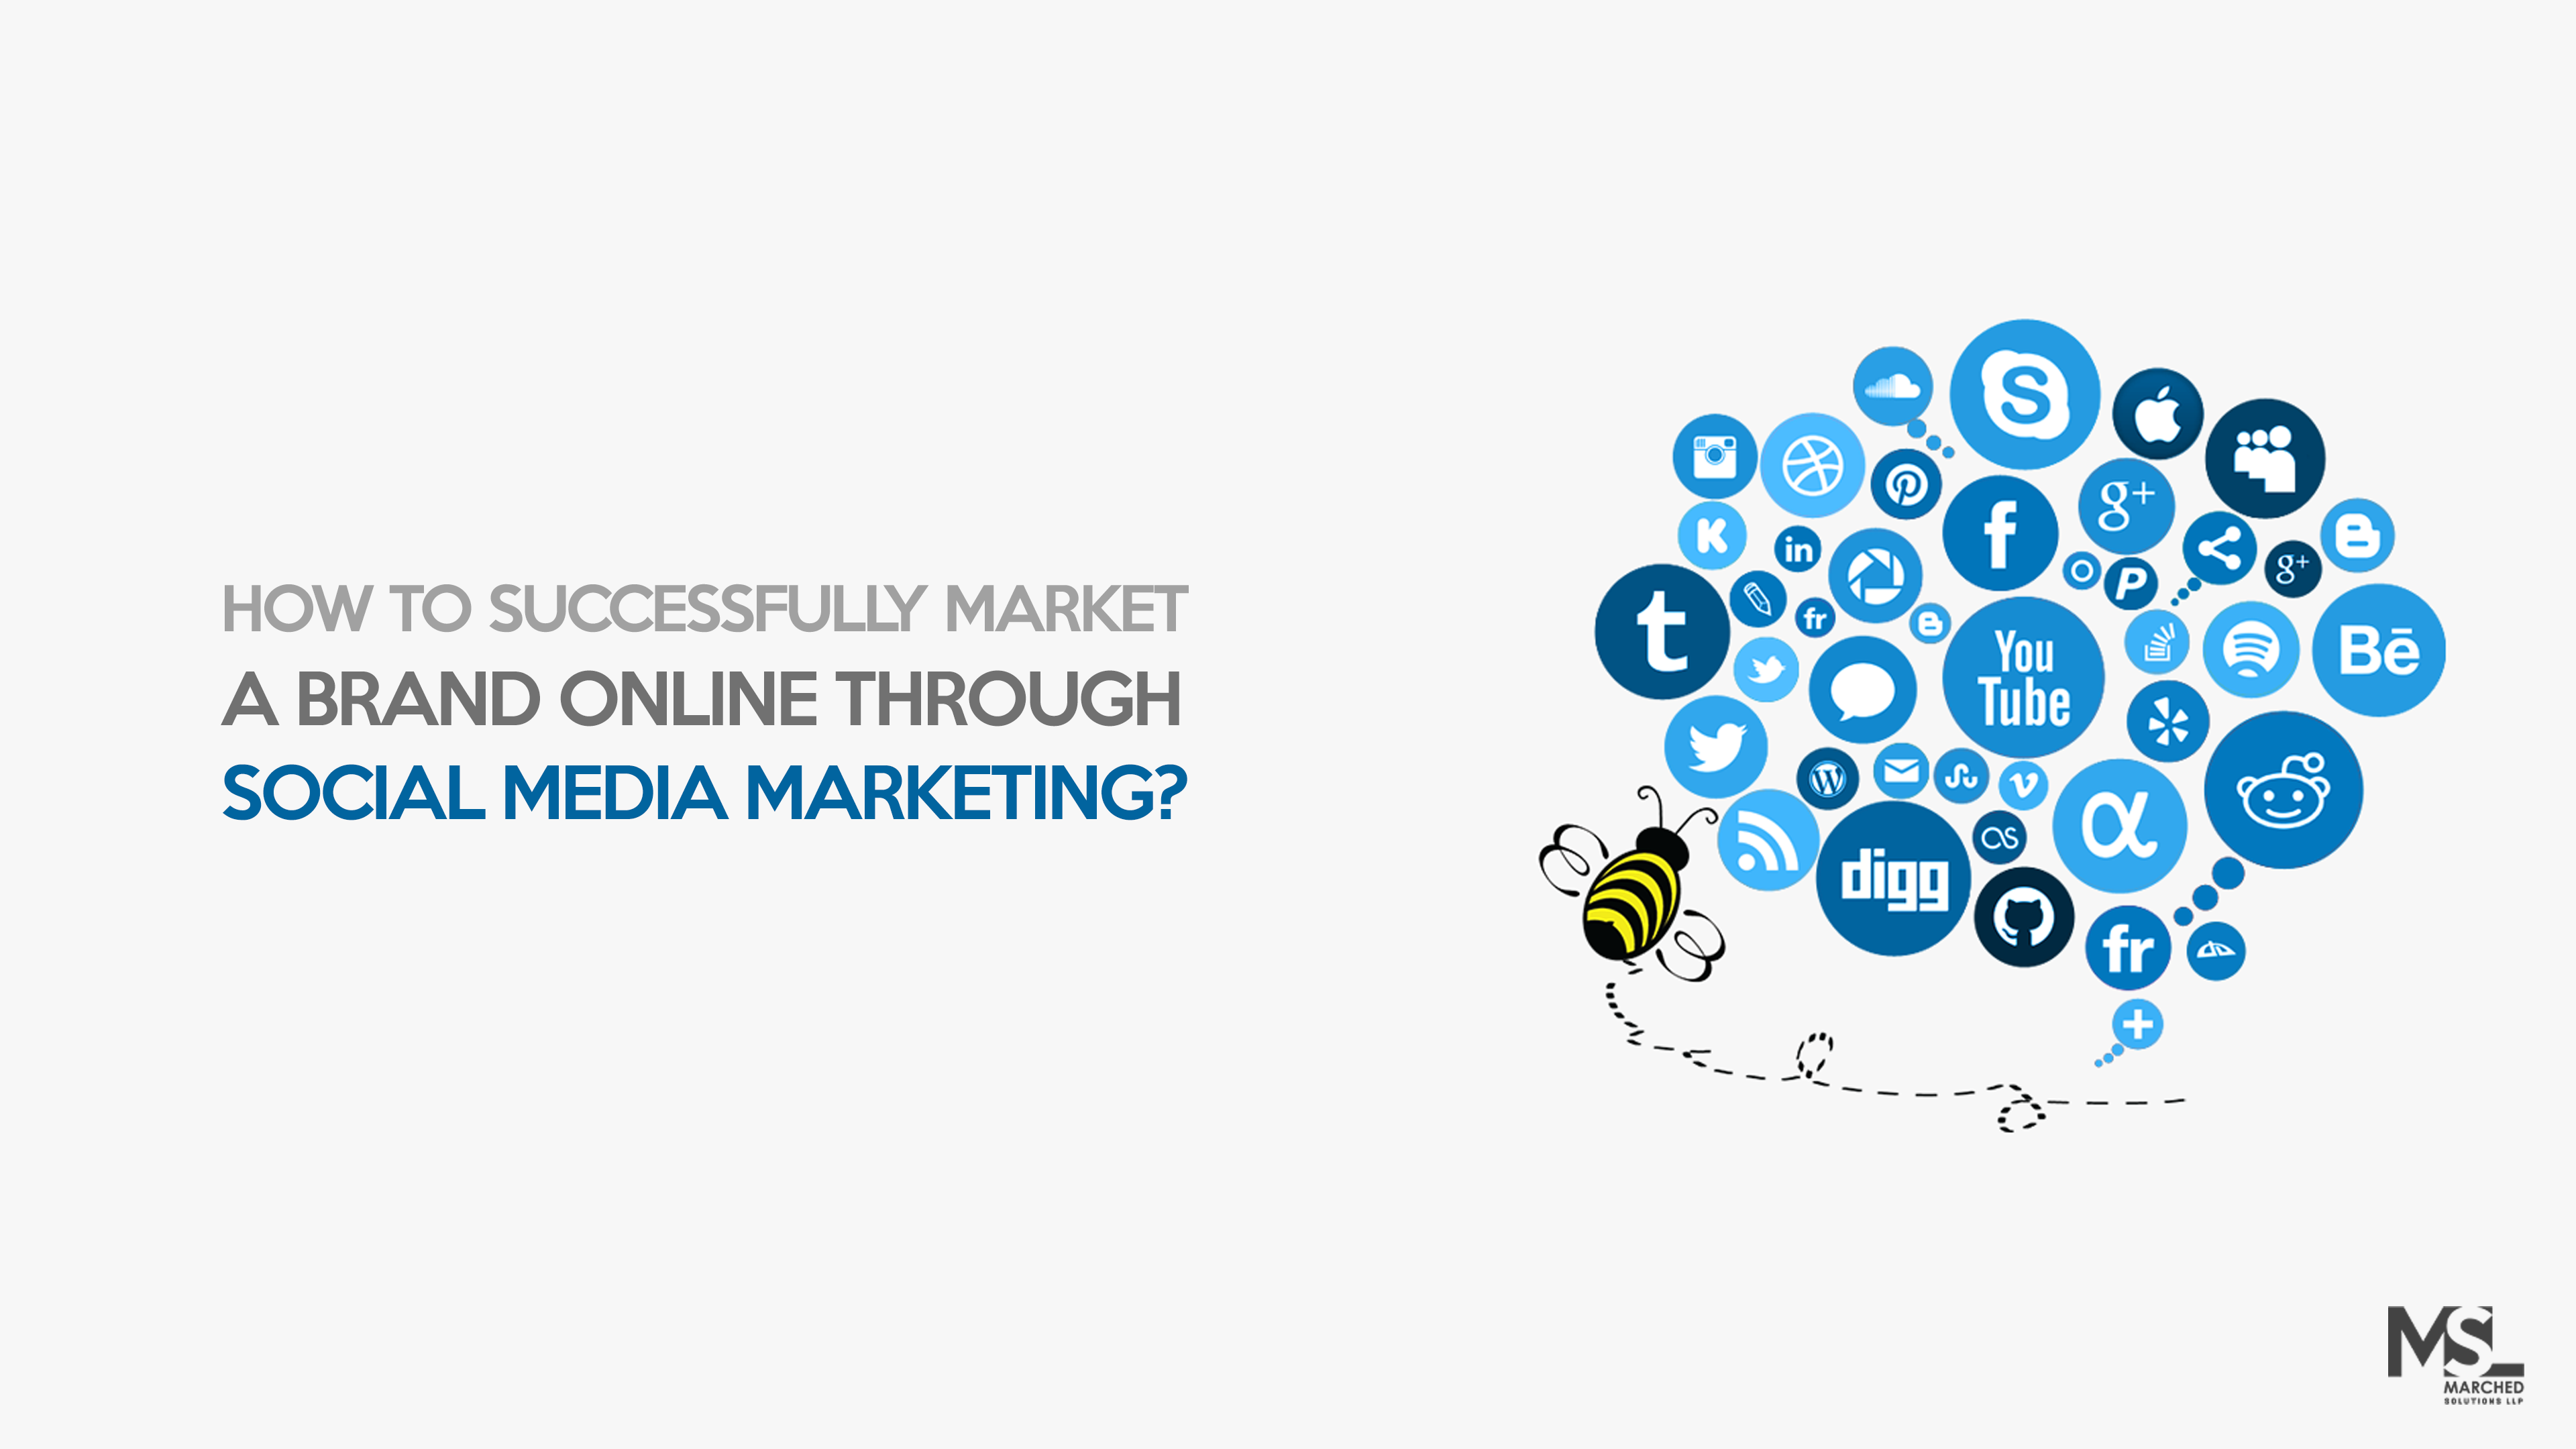 Brand Online Through Social Media Marketing